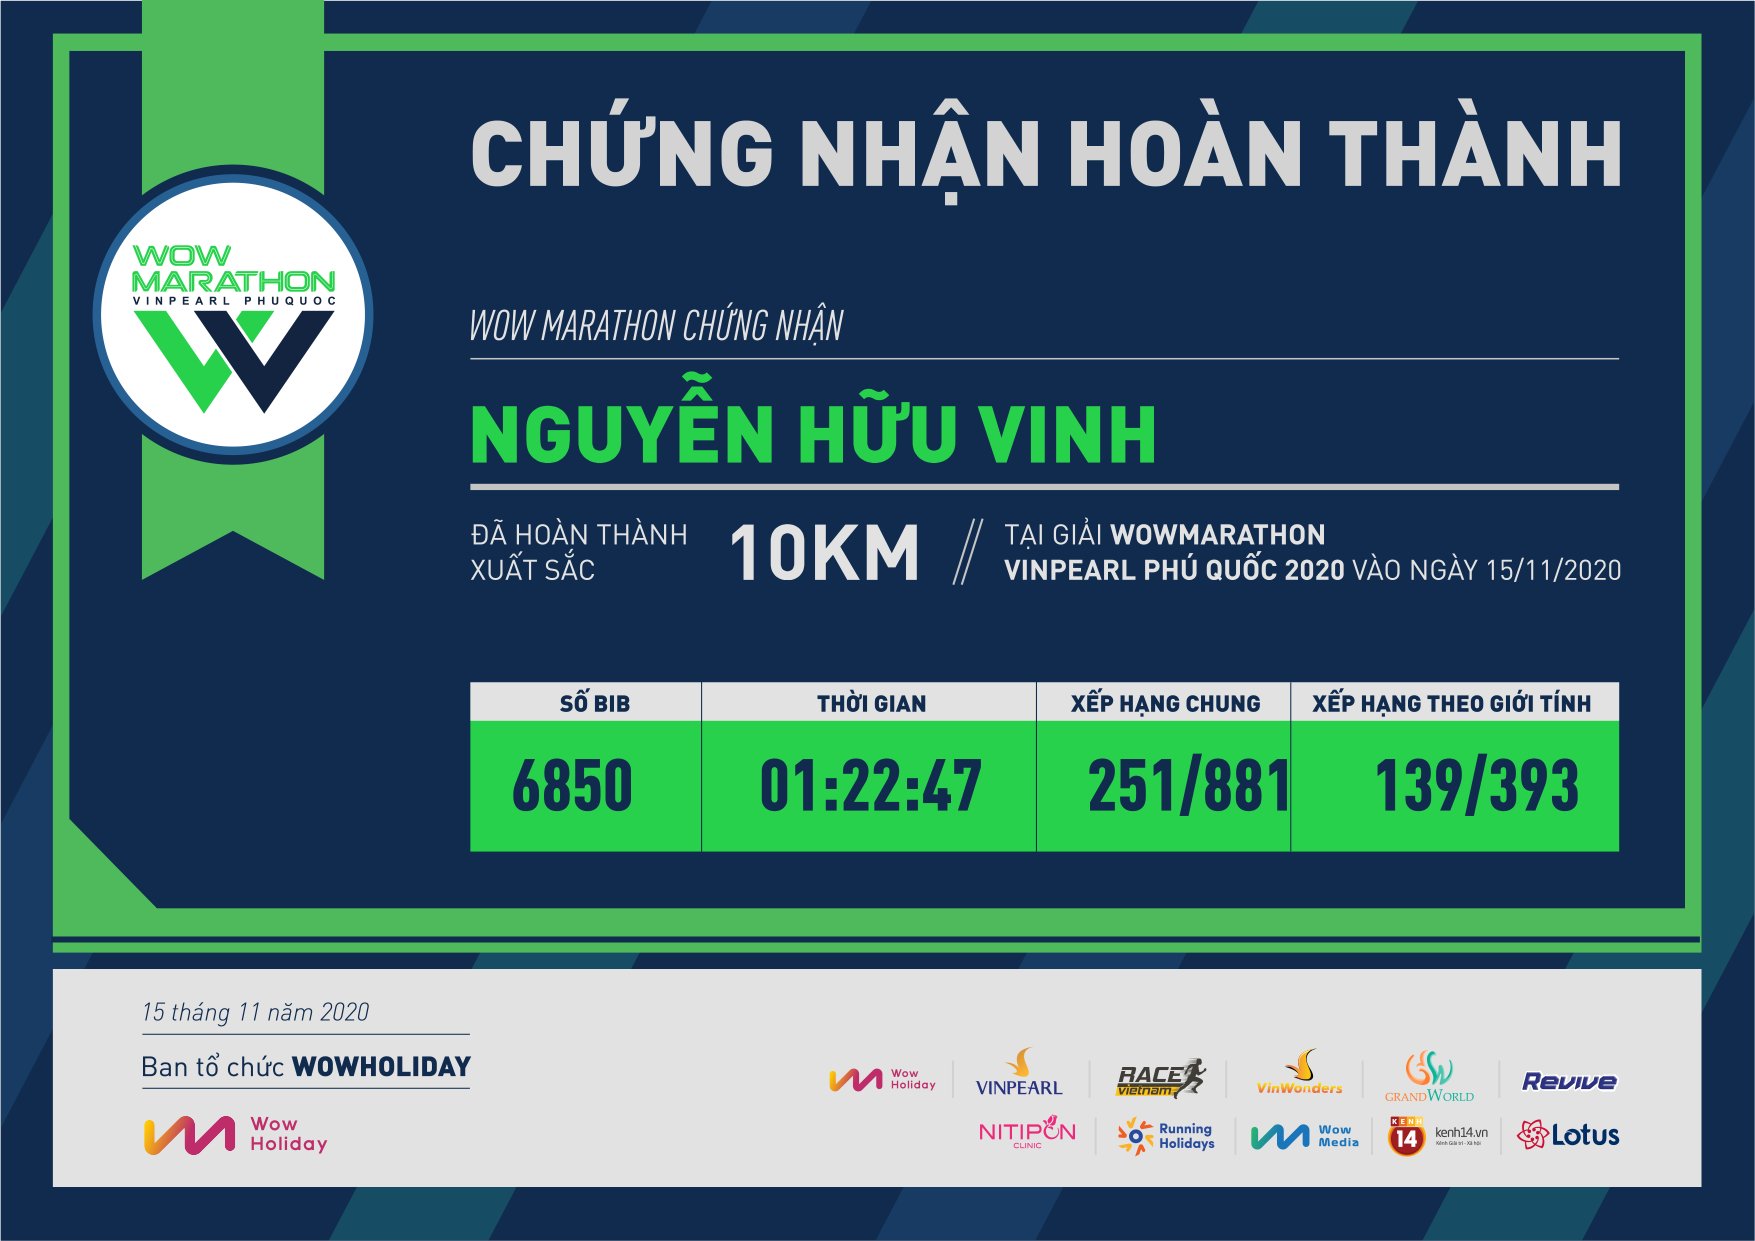 6850 - Nguyễn Hữu Vinh